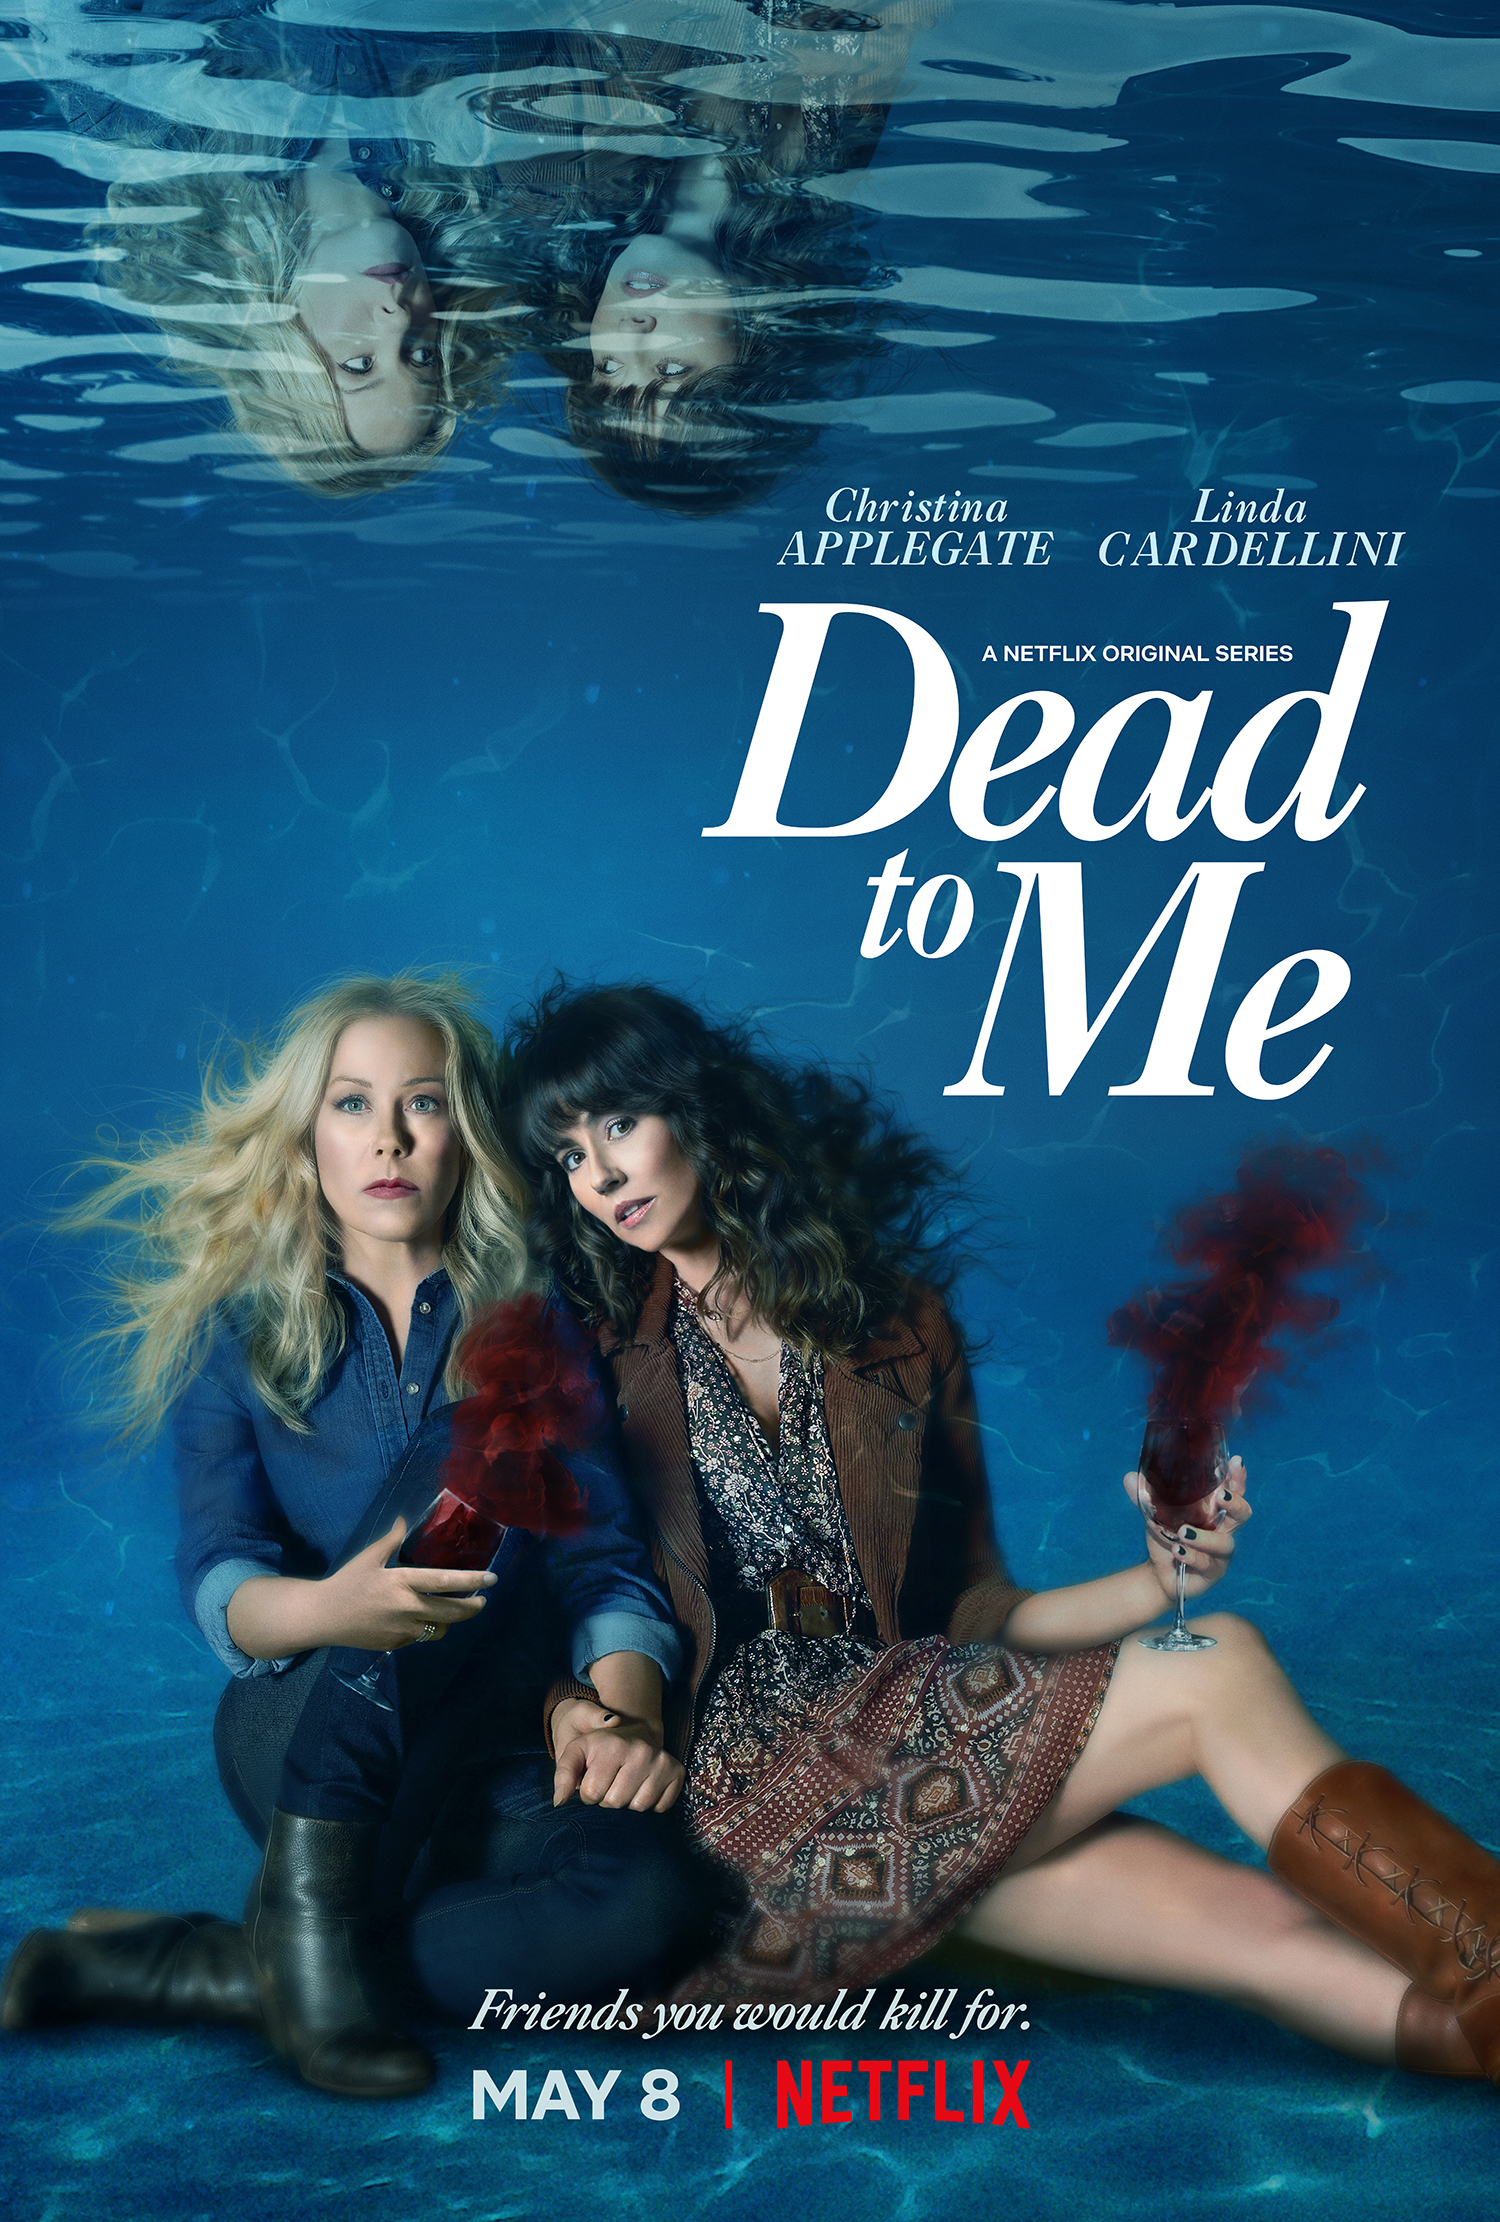 Dead to Me Netflix release date, cast, trailer, plot: When is the